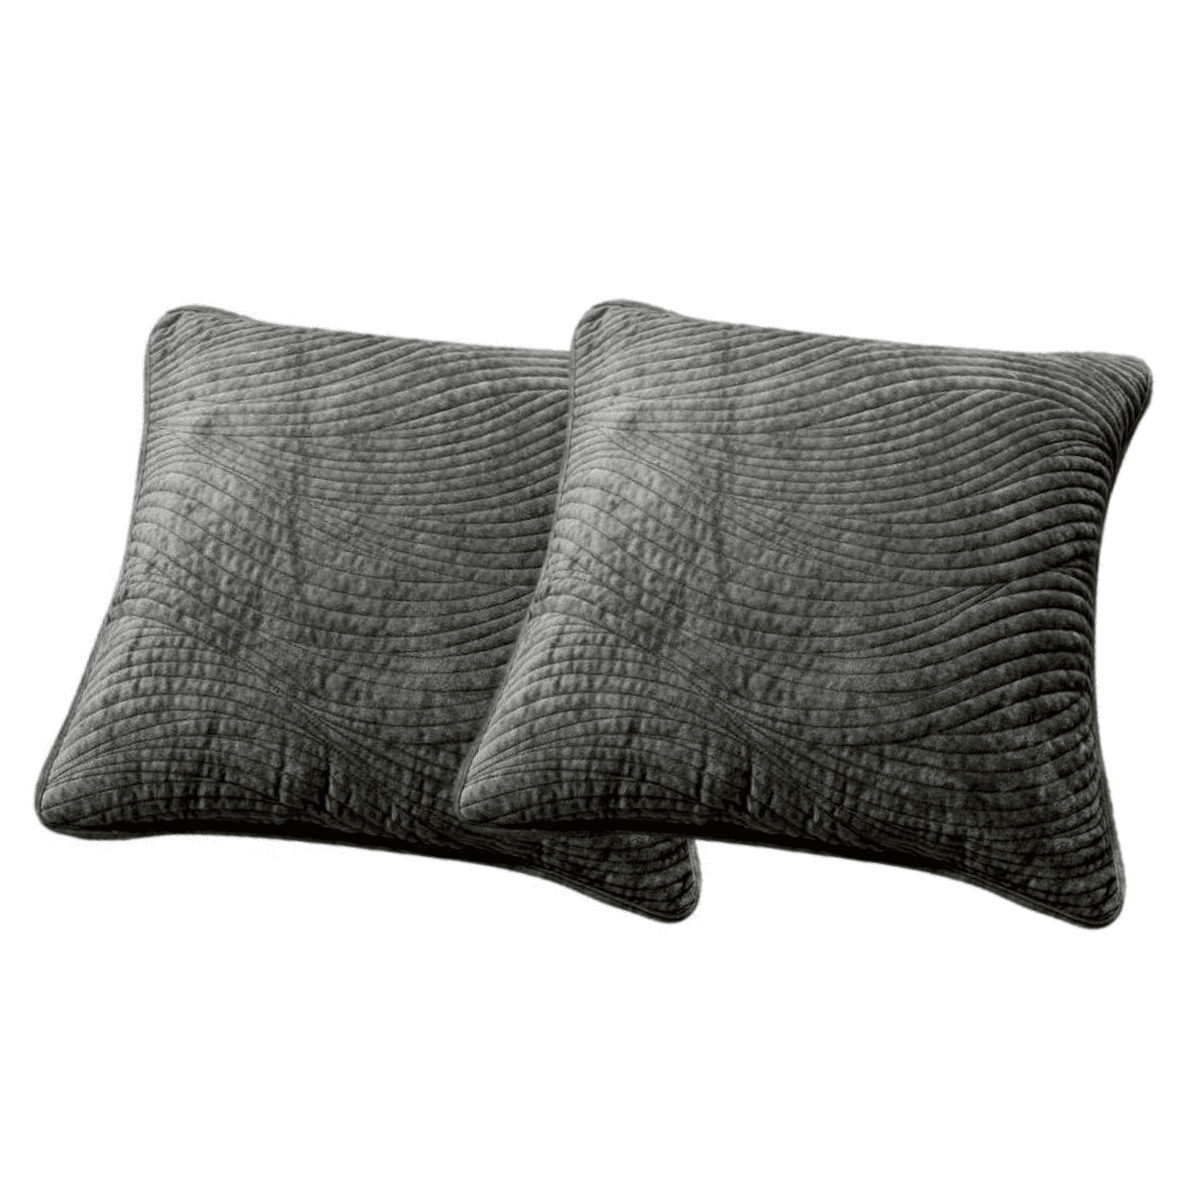 Tache Velvet Dreams Dark Taupe Plush Waves Cushion Covers / Euro Sham (JHW-852BR)